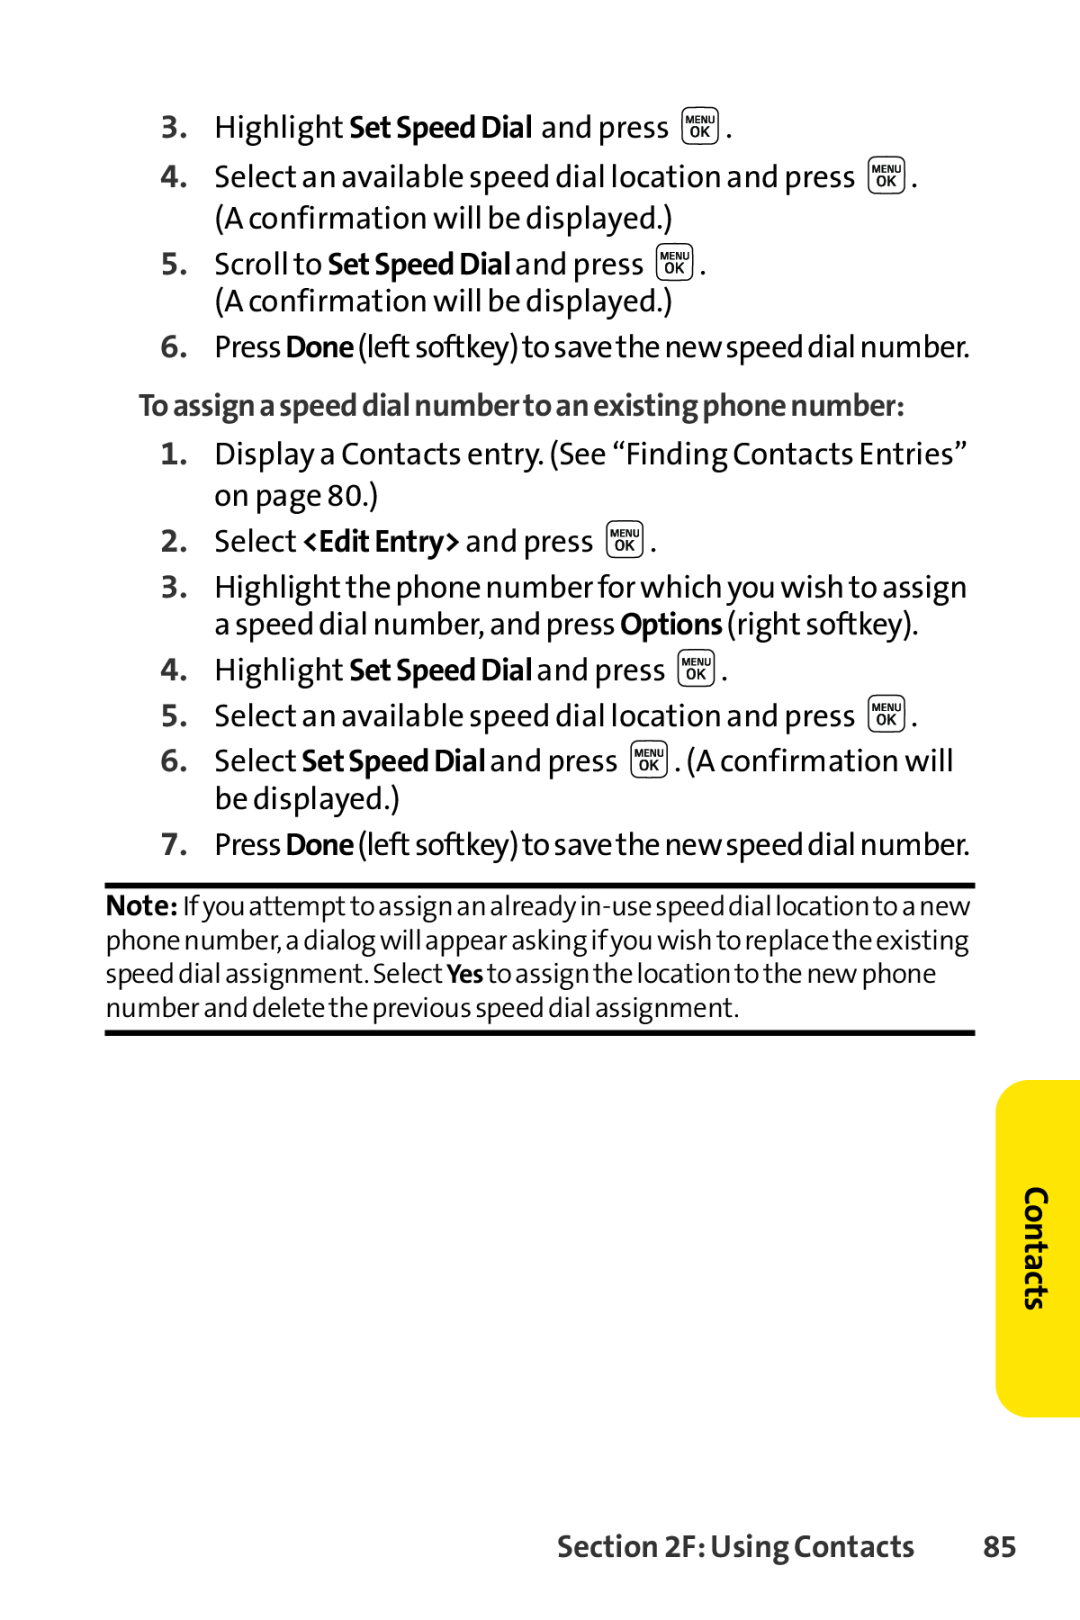 Sprint Nextel LX160 manual Toassignaspeeddialnumbertoanexistingphonenumber, Contacts 